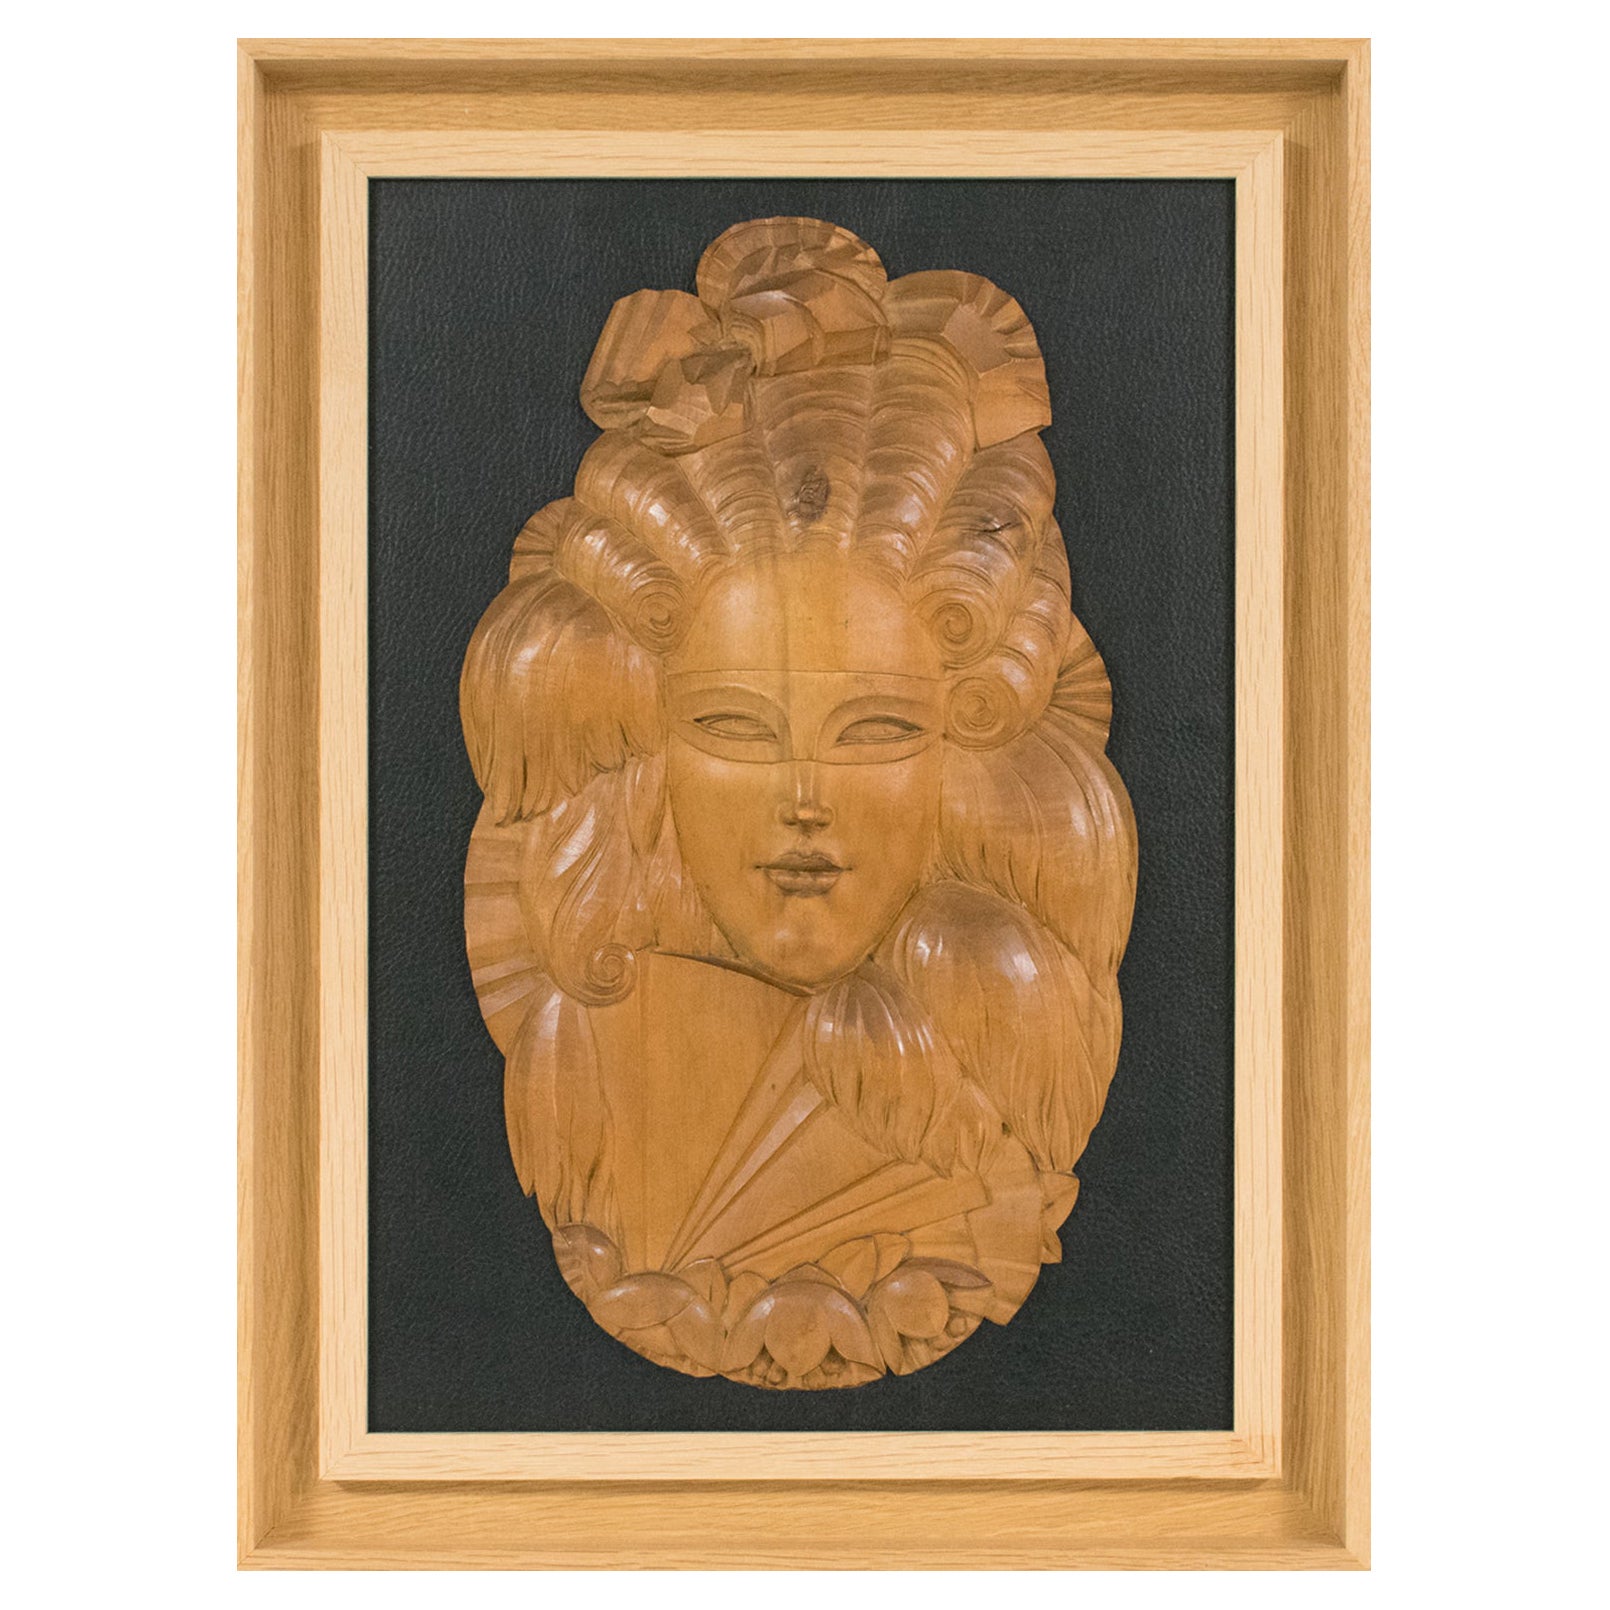 Art Deco Carved Wood Venetian Mask Portrait Wall Panel Sculpture, 1930s